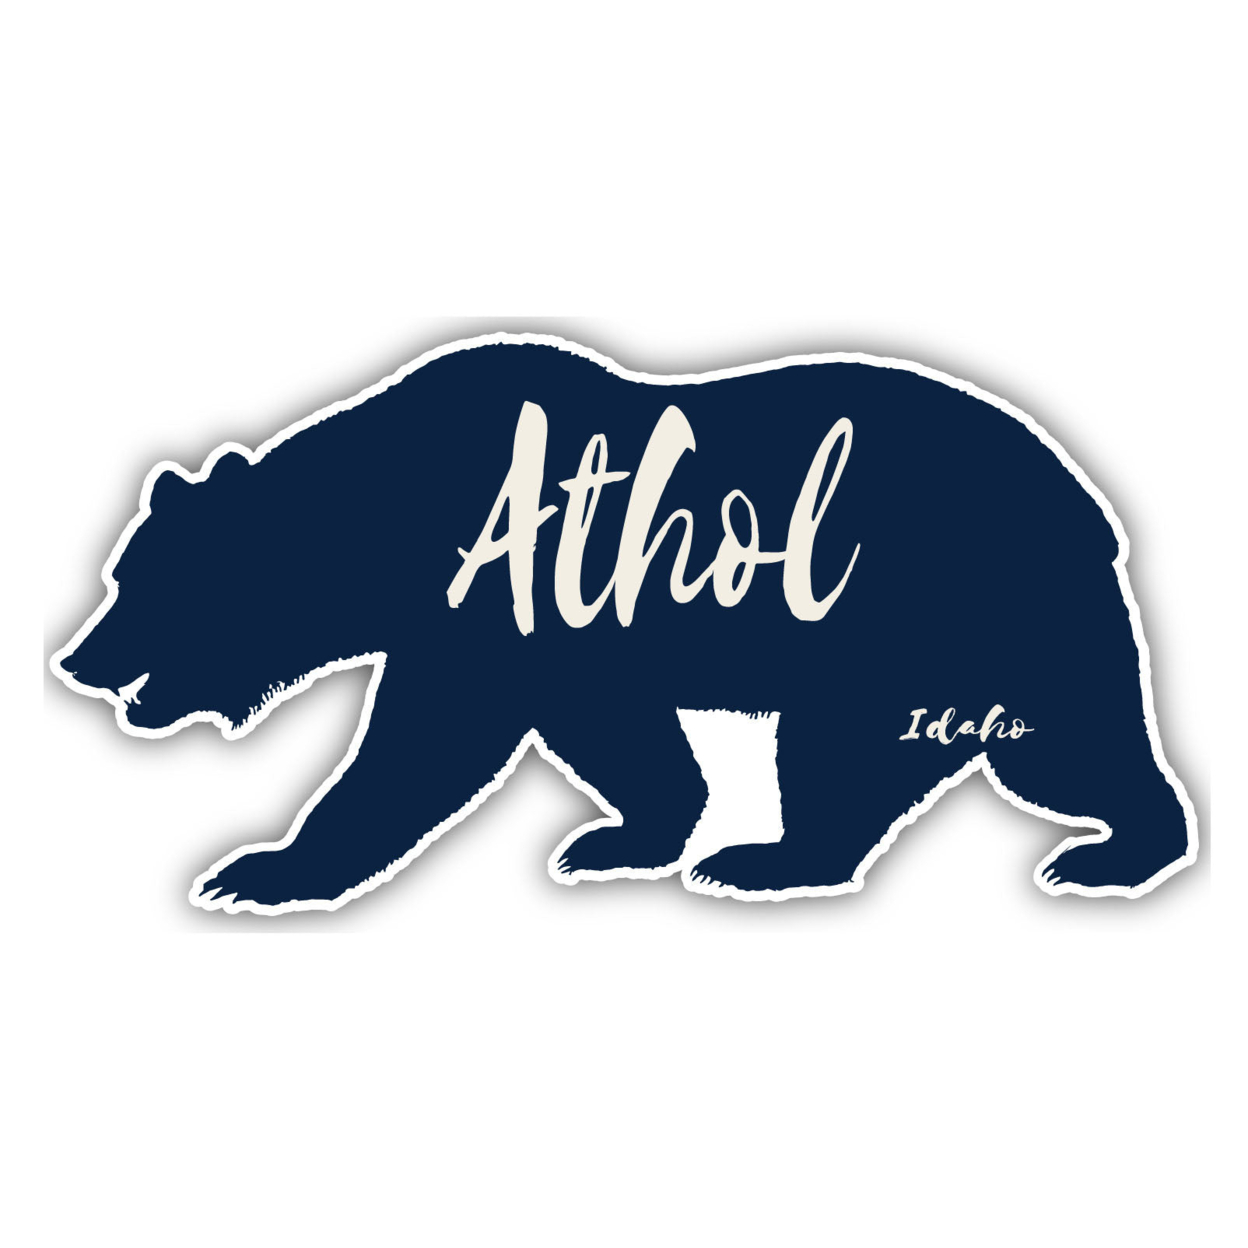 Athol Idaho Souvenir Decorative Stickers (Choose Theme And Size) - 4-Pack, 10-Inch, Bear